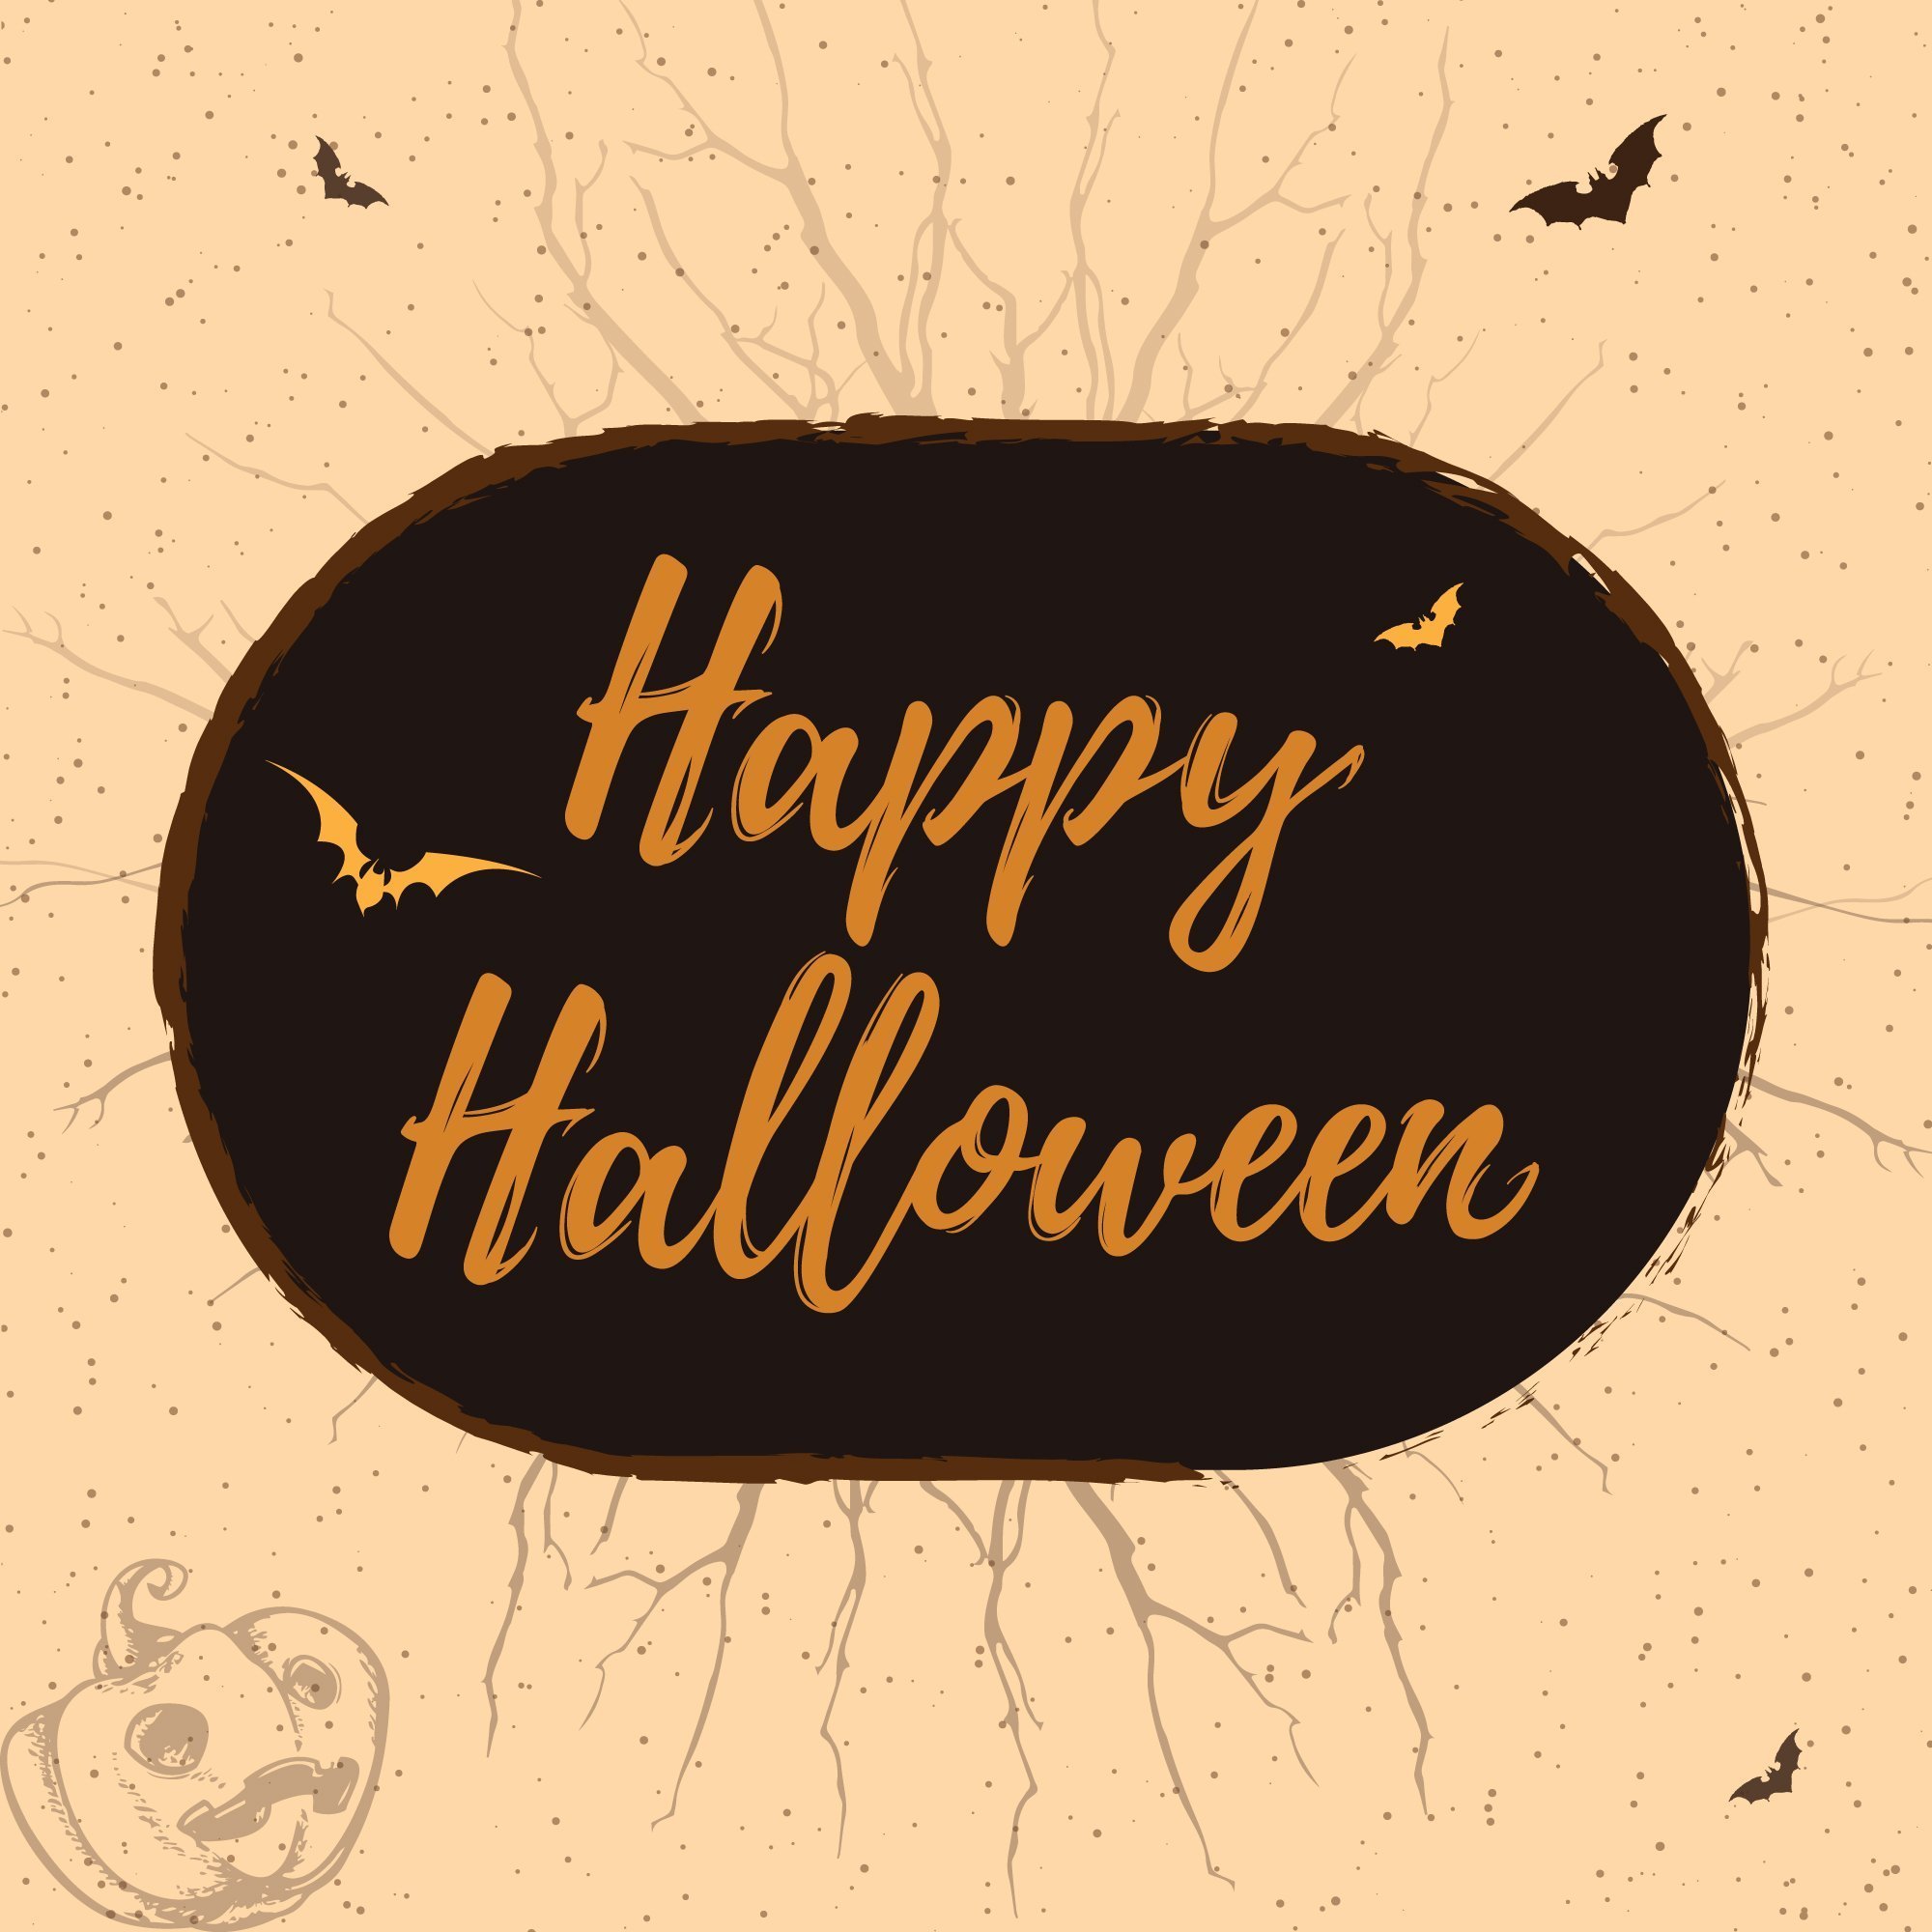 Happy Halloween Background Design